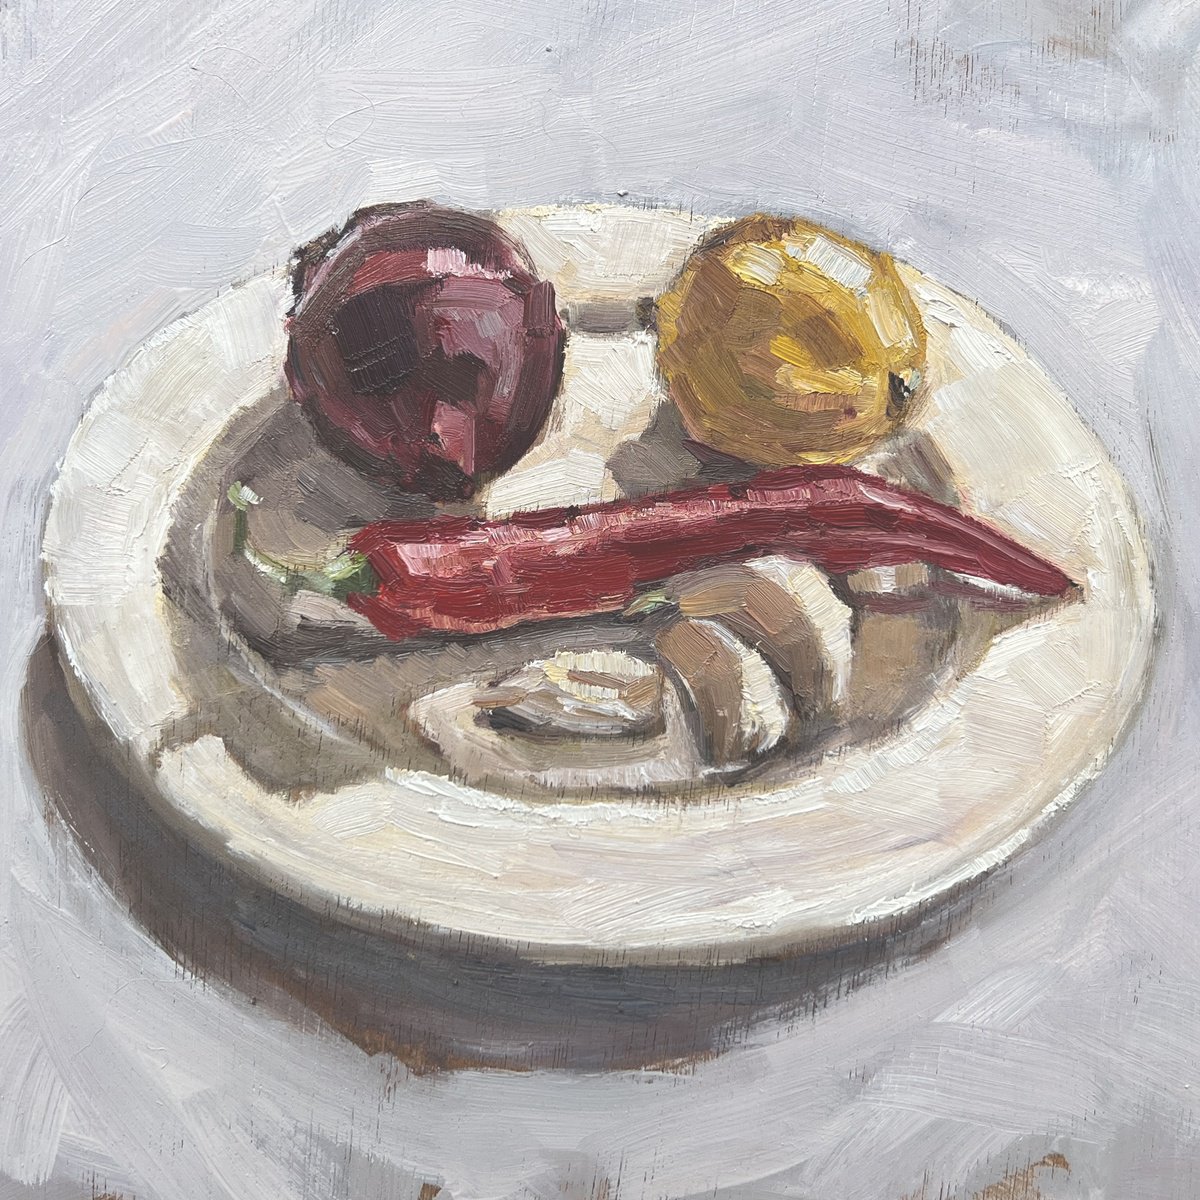 Lemon, chilli pepper, onion and garlic by Louise Gillard